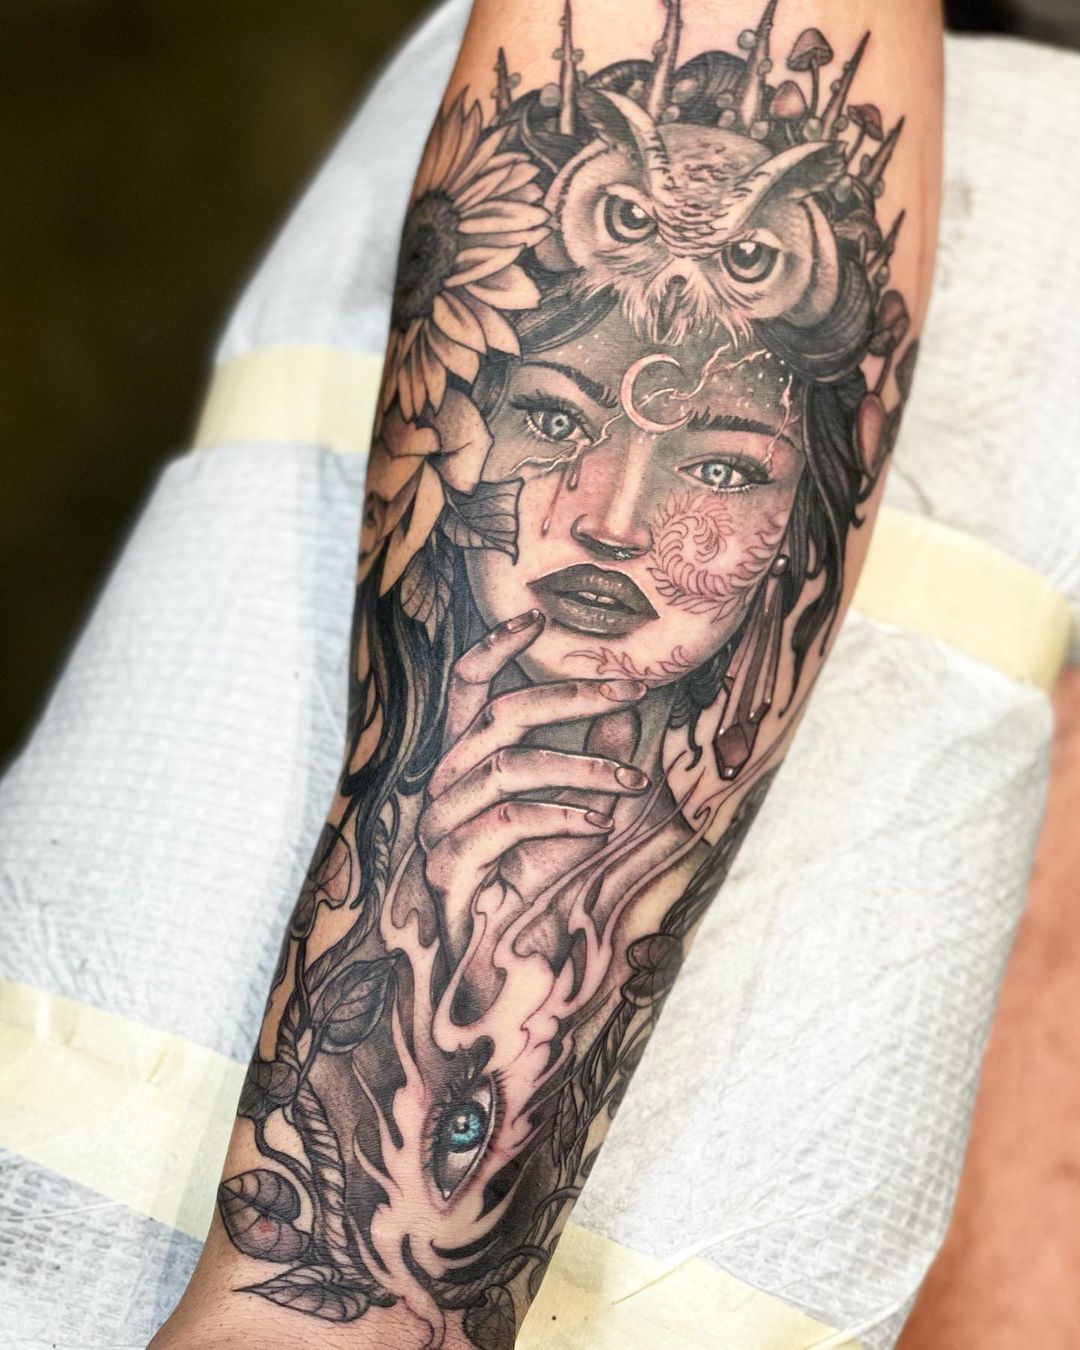 Broken Art Tattoo — Our Lady of Nature (at Broken Art Tattoo)...